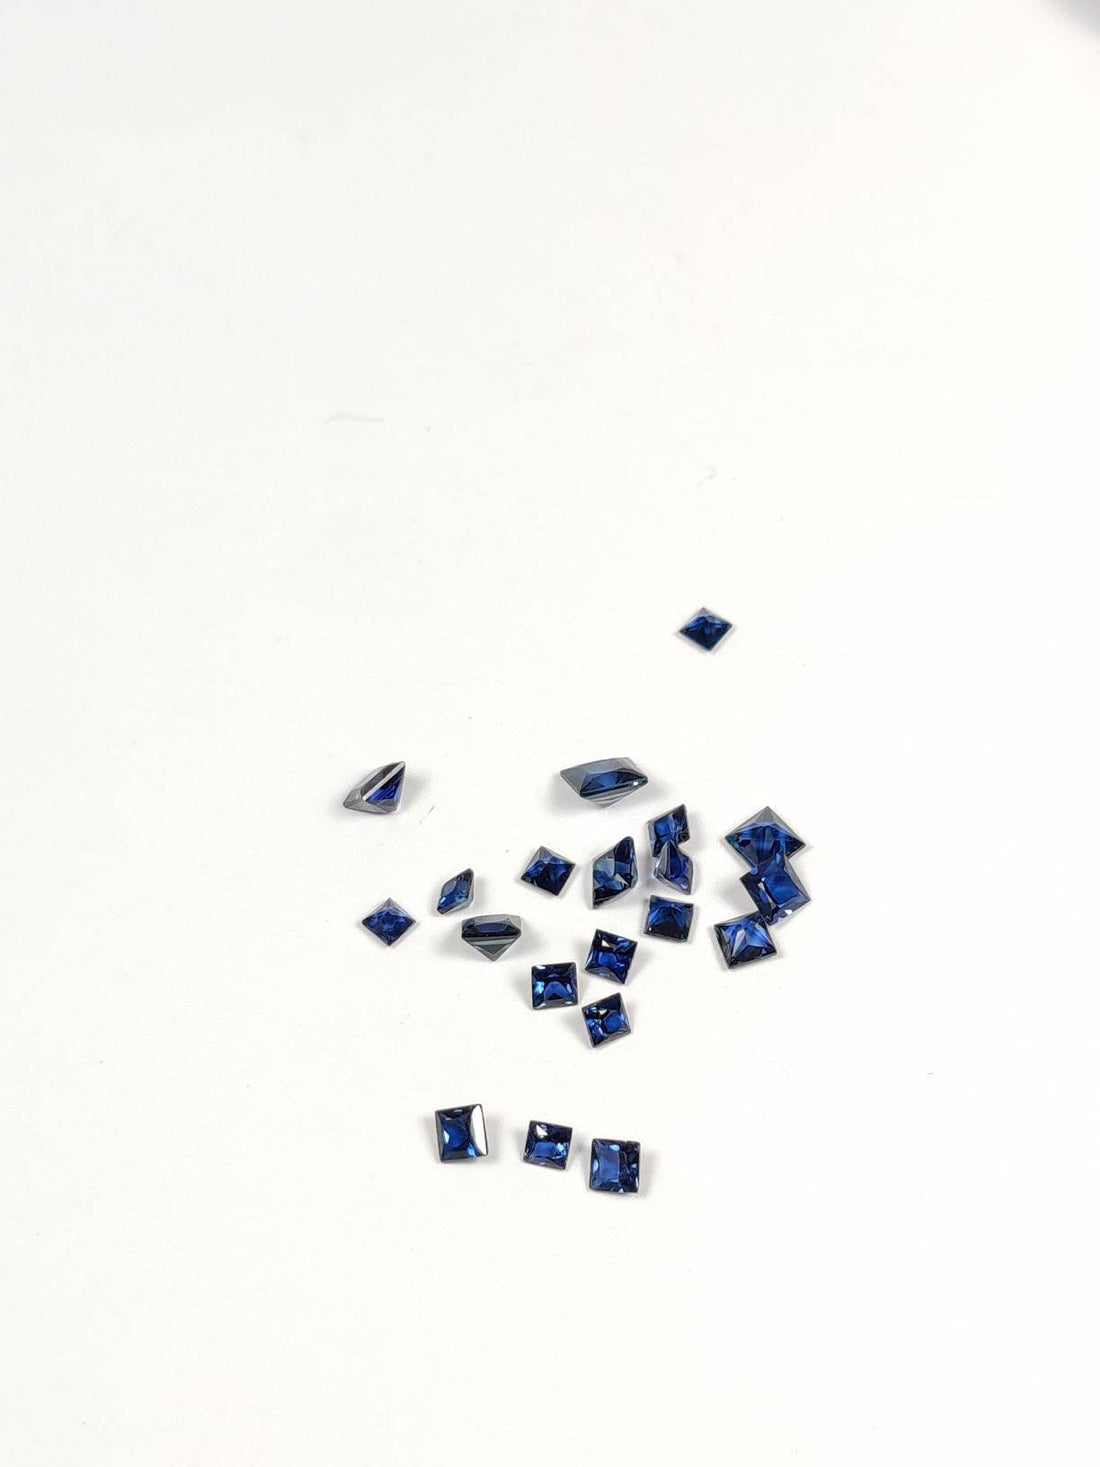 1.8 - 3.3 MM  Natural Princess Cut Blue Sapphire